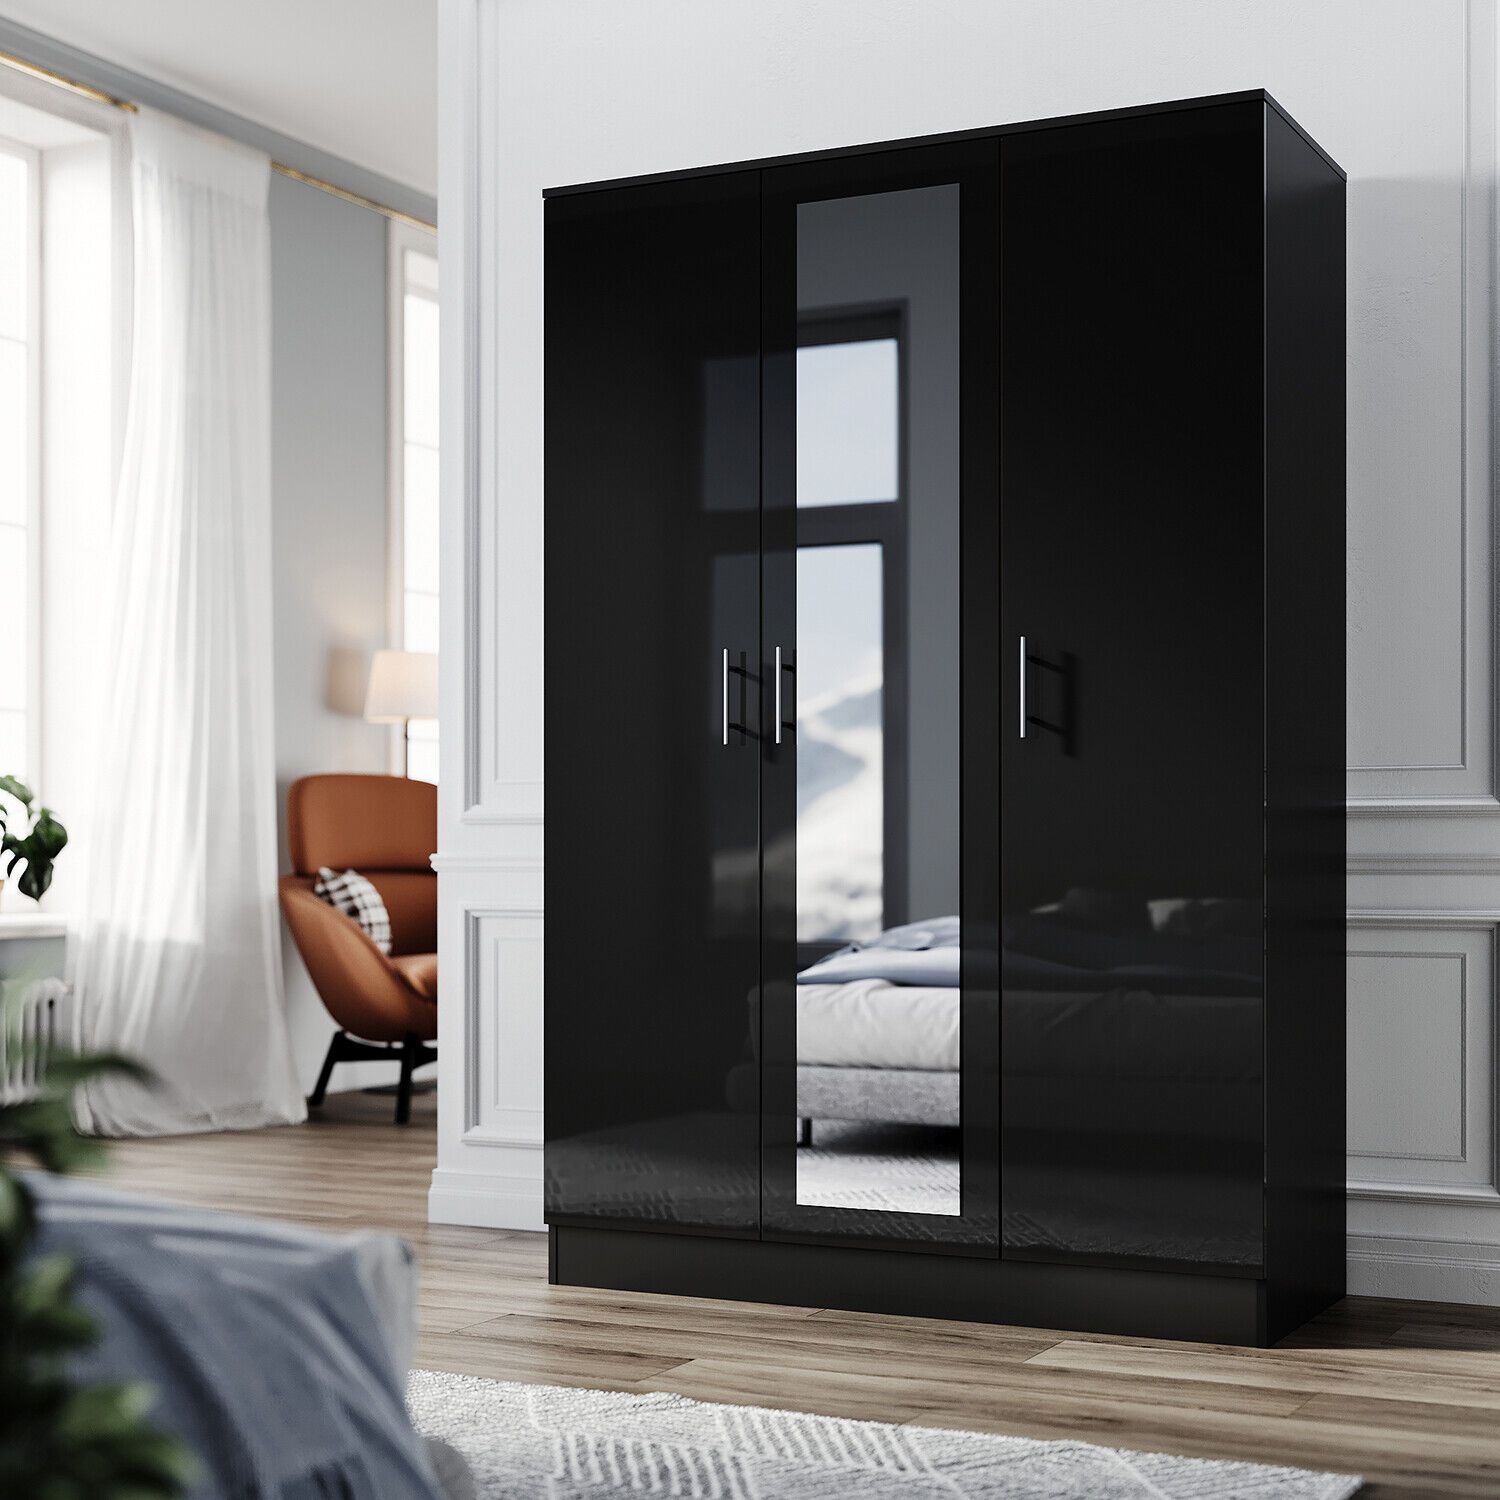 Black Gloss 3 Door Triple Mirrored Wardrobe With Hanging Rail & Shelves  Bedroom | Ebay For Black Gloss 3 Door Wardrobes (View 13 of 15)